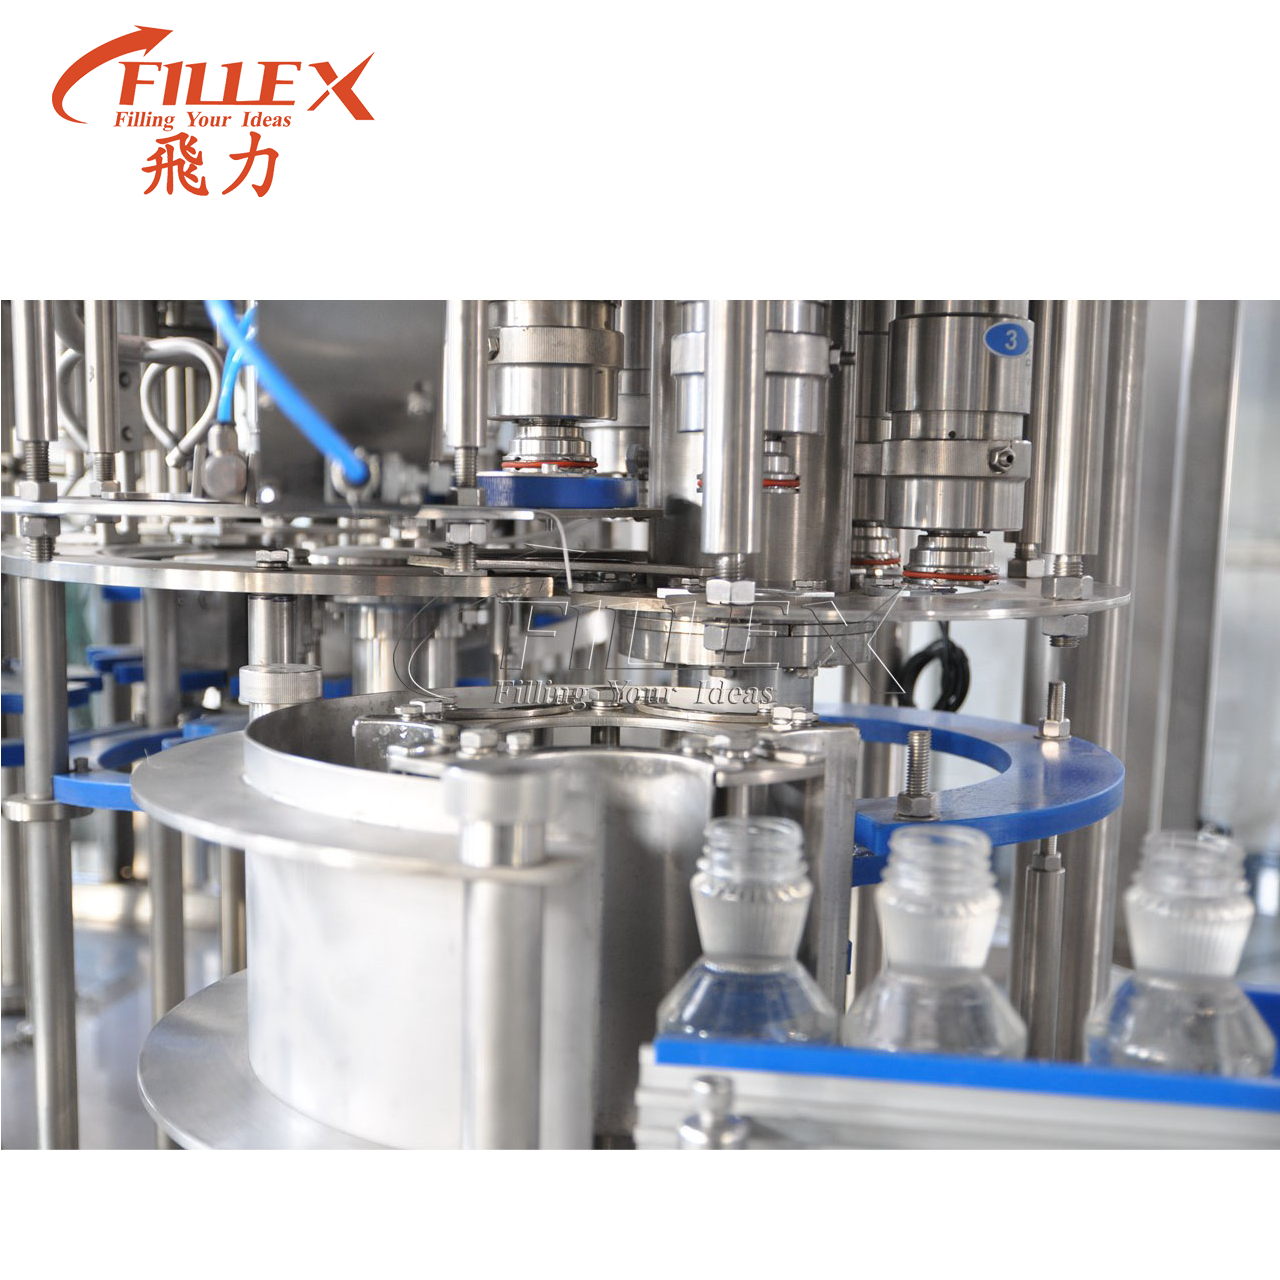 PET Bottle Juice/Tea/Energy Drink/Milk Filling Equipment 3 in 1 Production Line